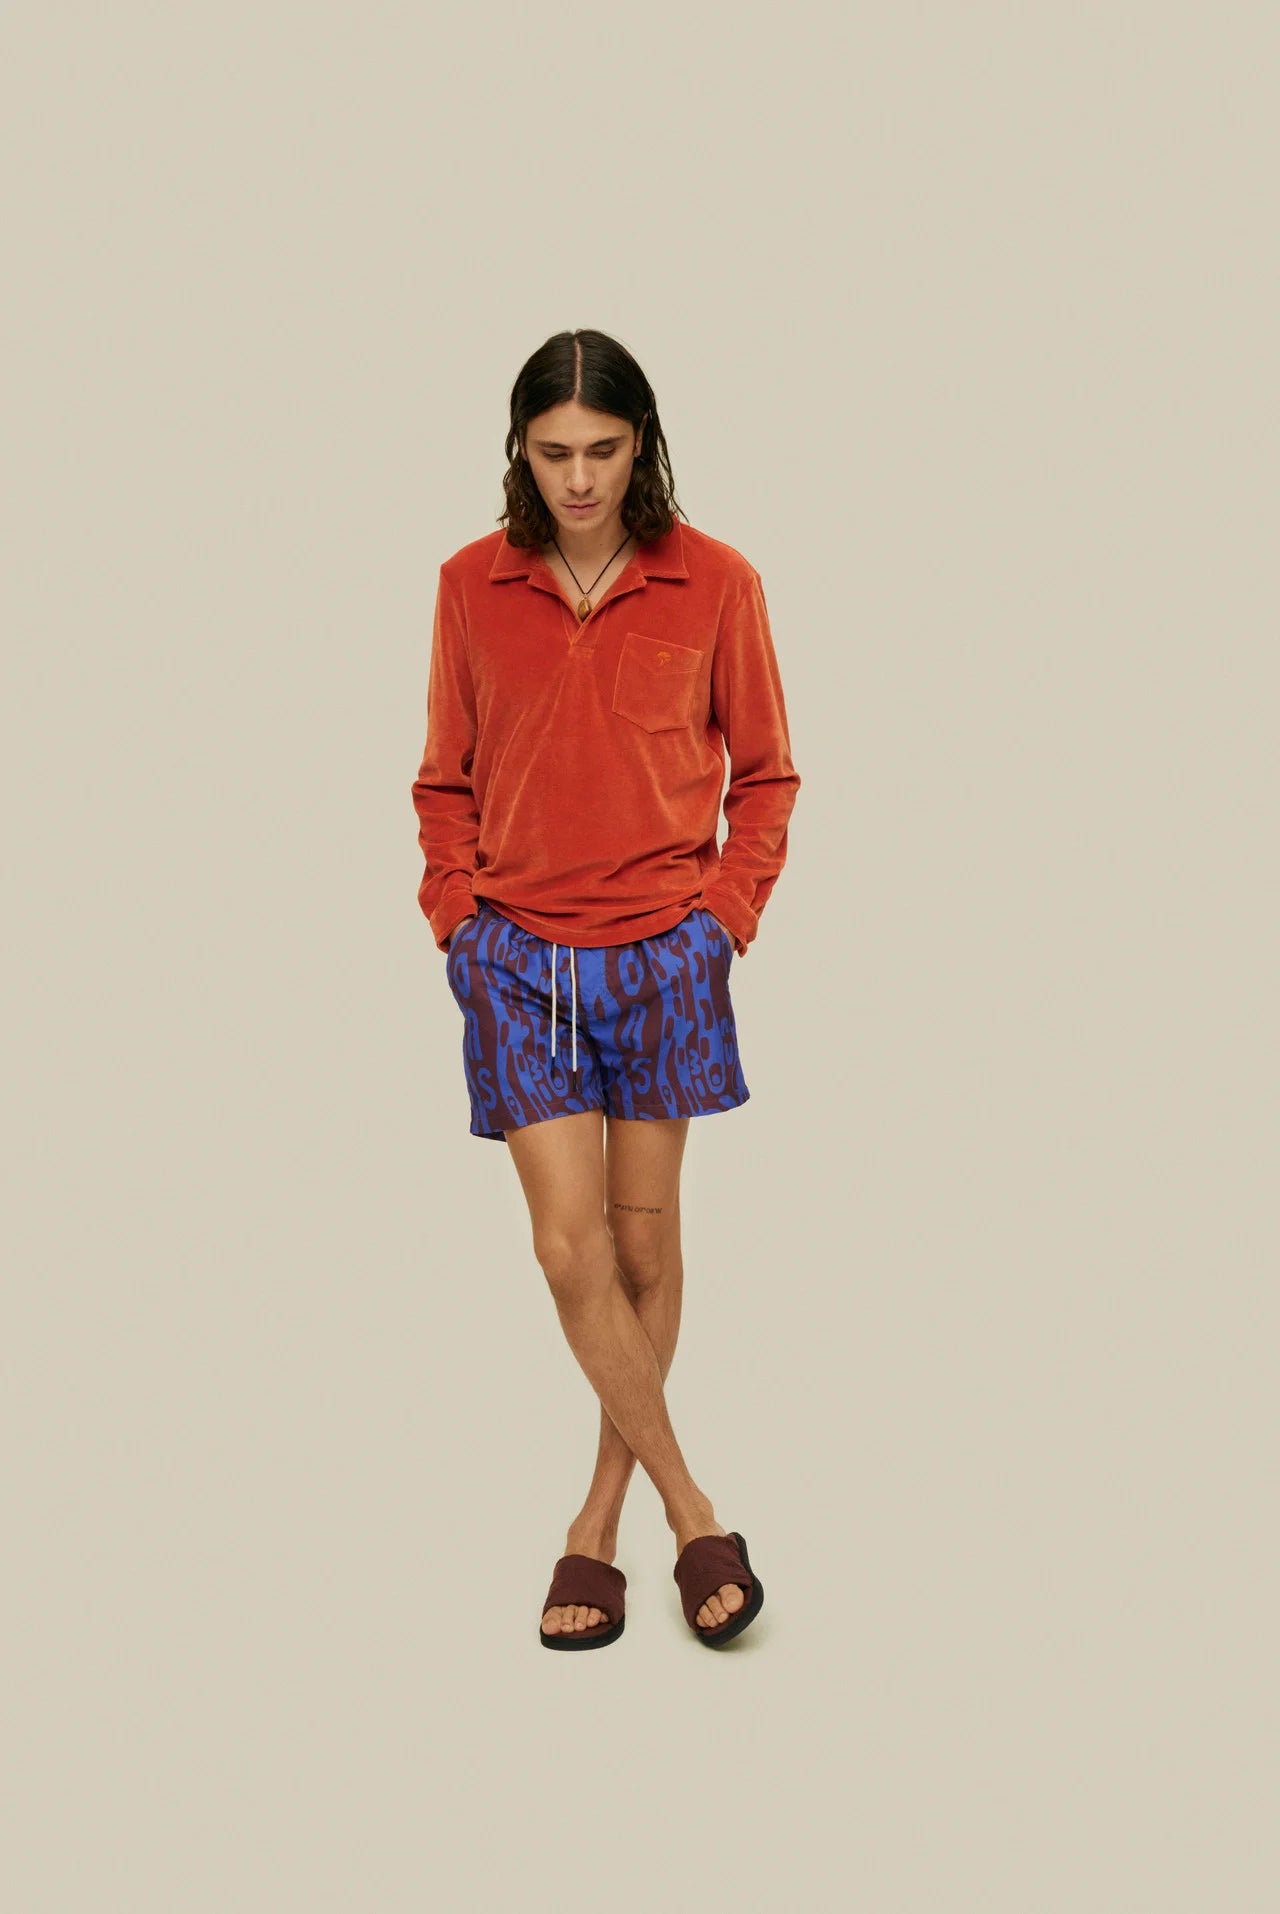 OAS Thenards Jiggle Swim Shorts on model. Model is wearing swim shorts with orange terry shirt. Taken from front.